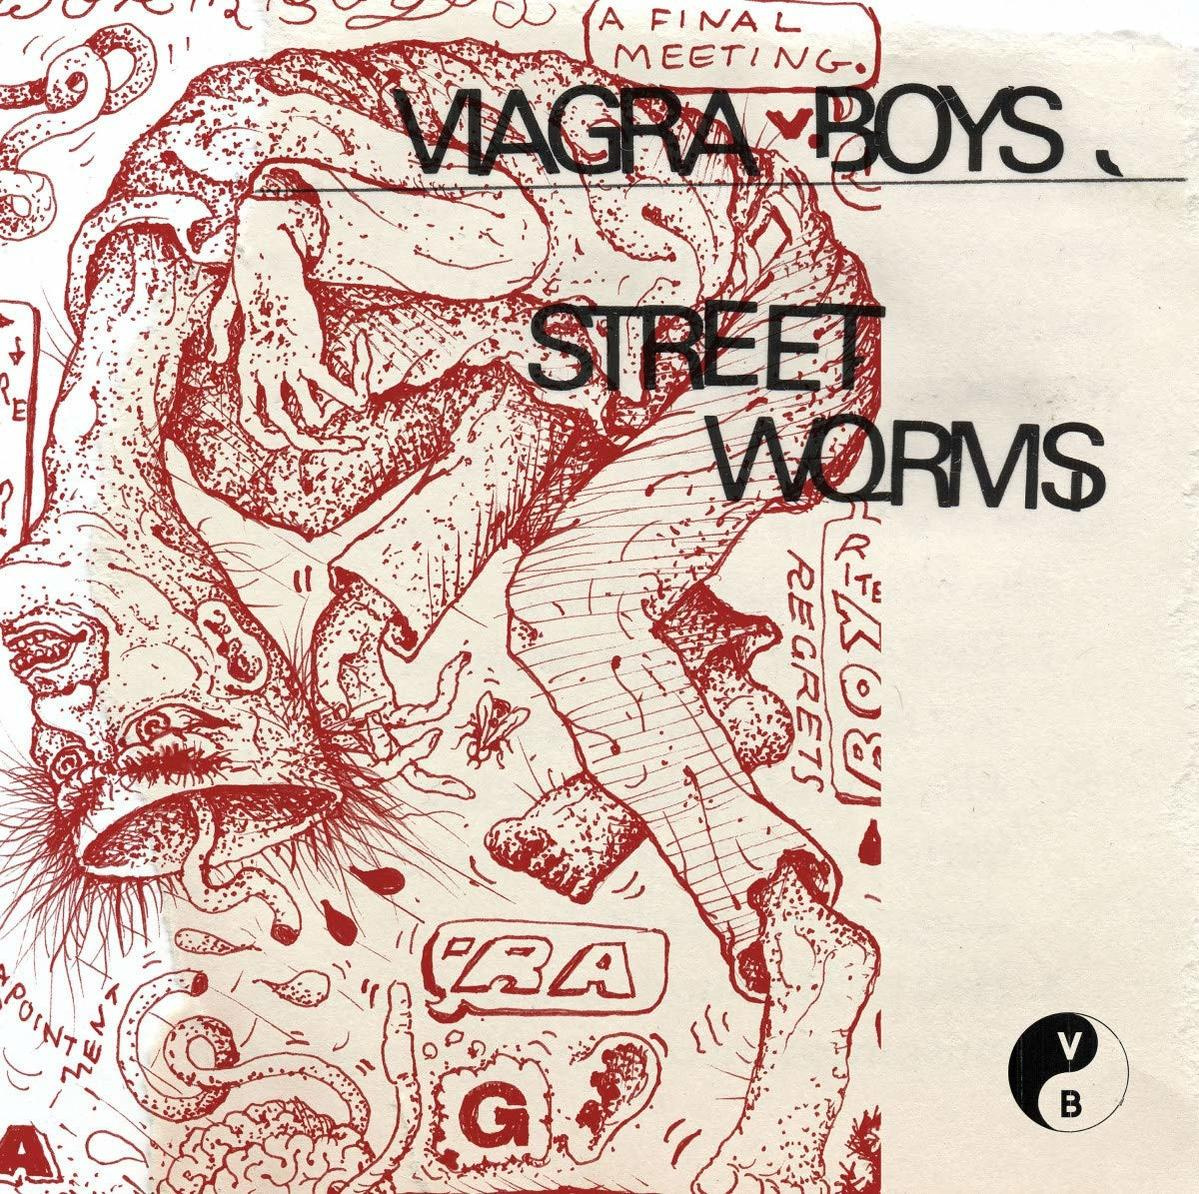 Viagra Boys - Street - (Vinyl) Worms